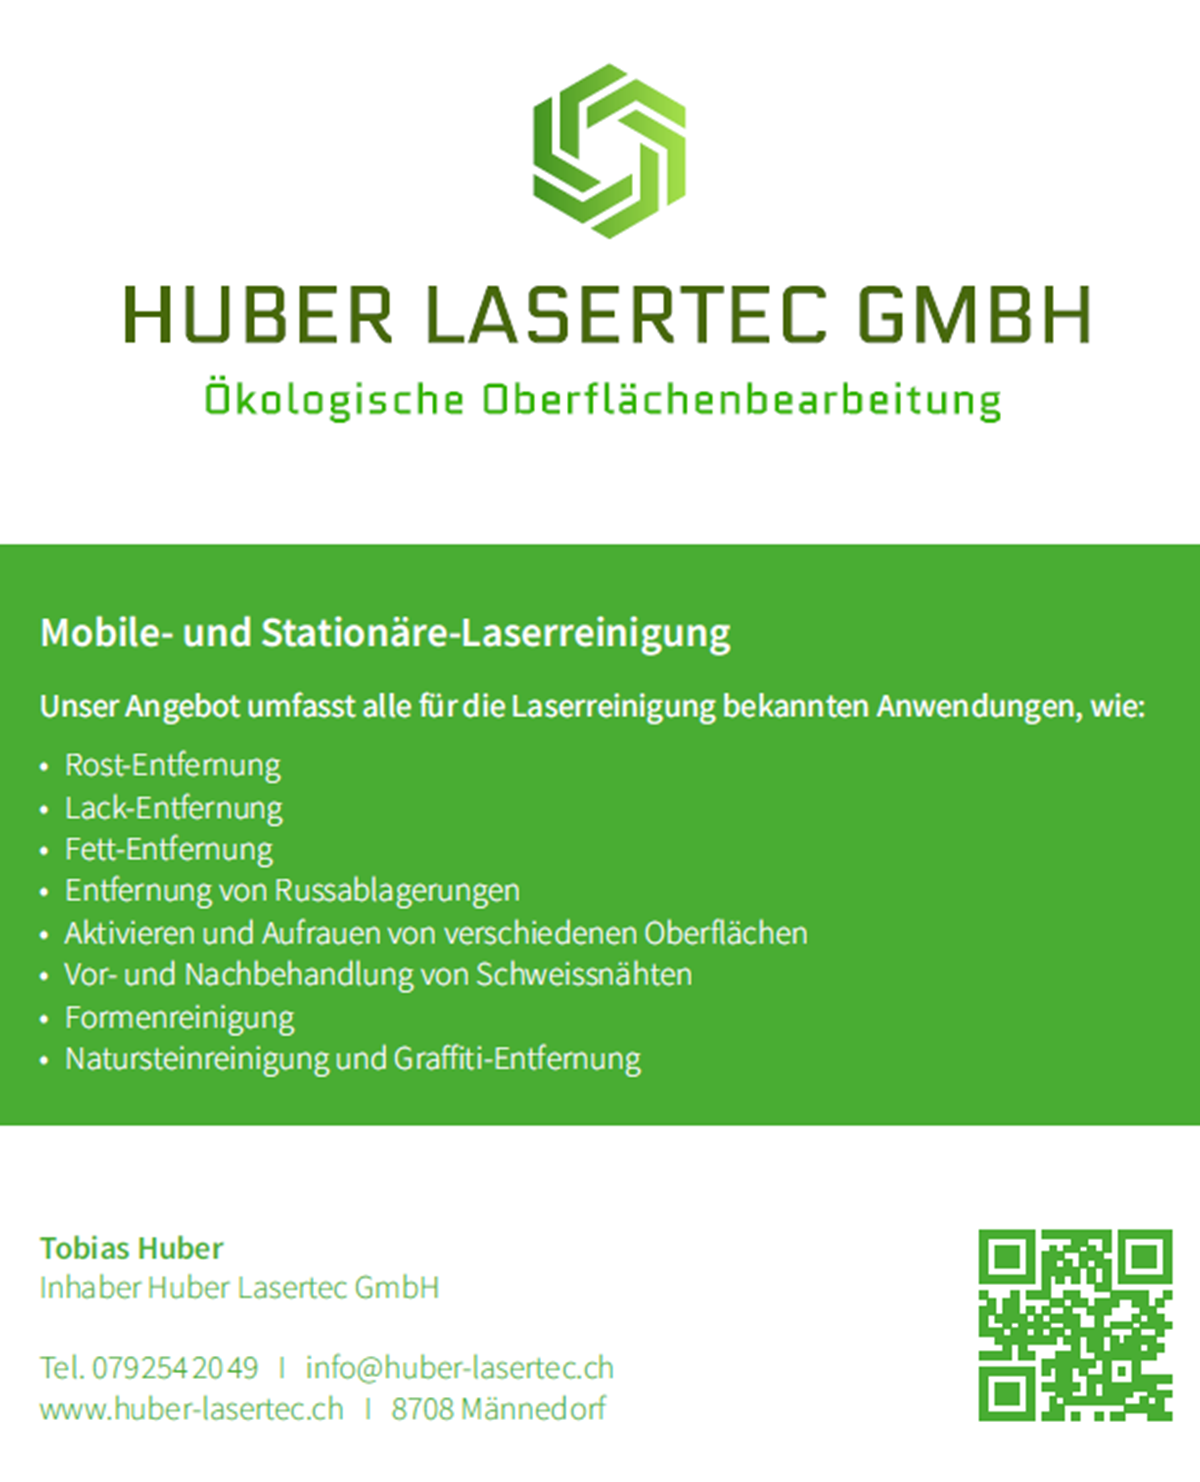 Huber Lasertec GmbH